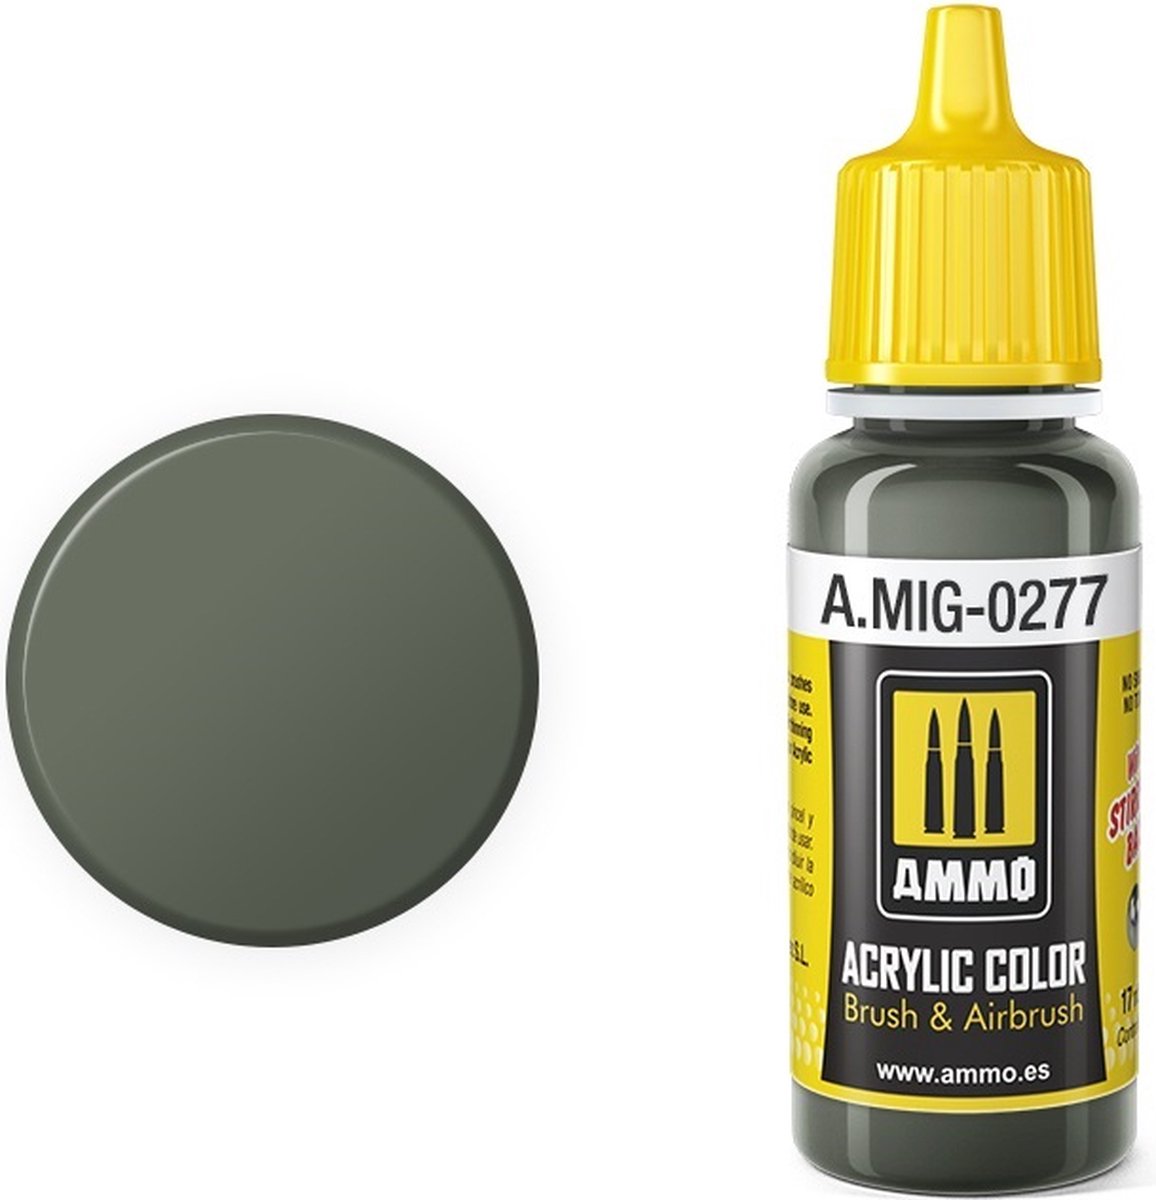 AMMO MIG 0277 Green Grey FS 34159 - Acryl - 17ml Verf flesje